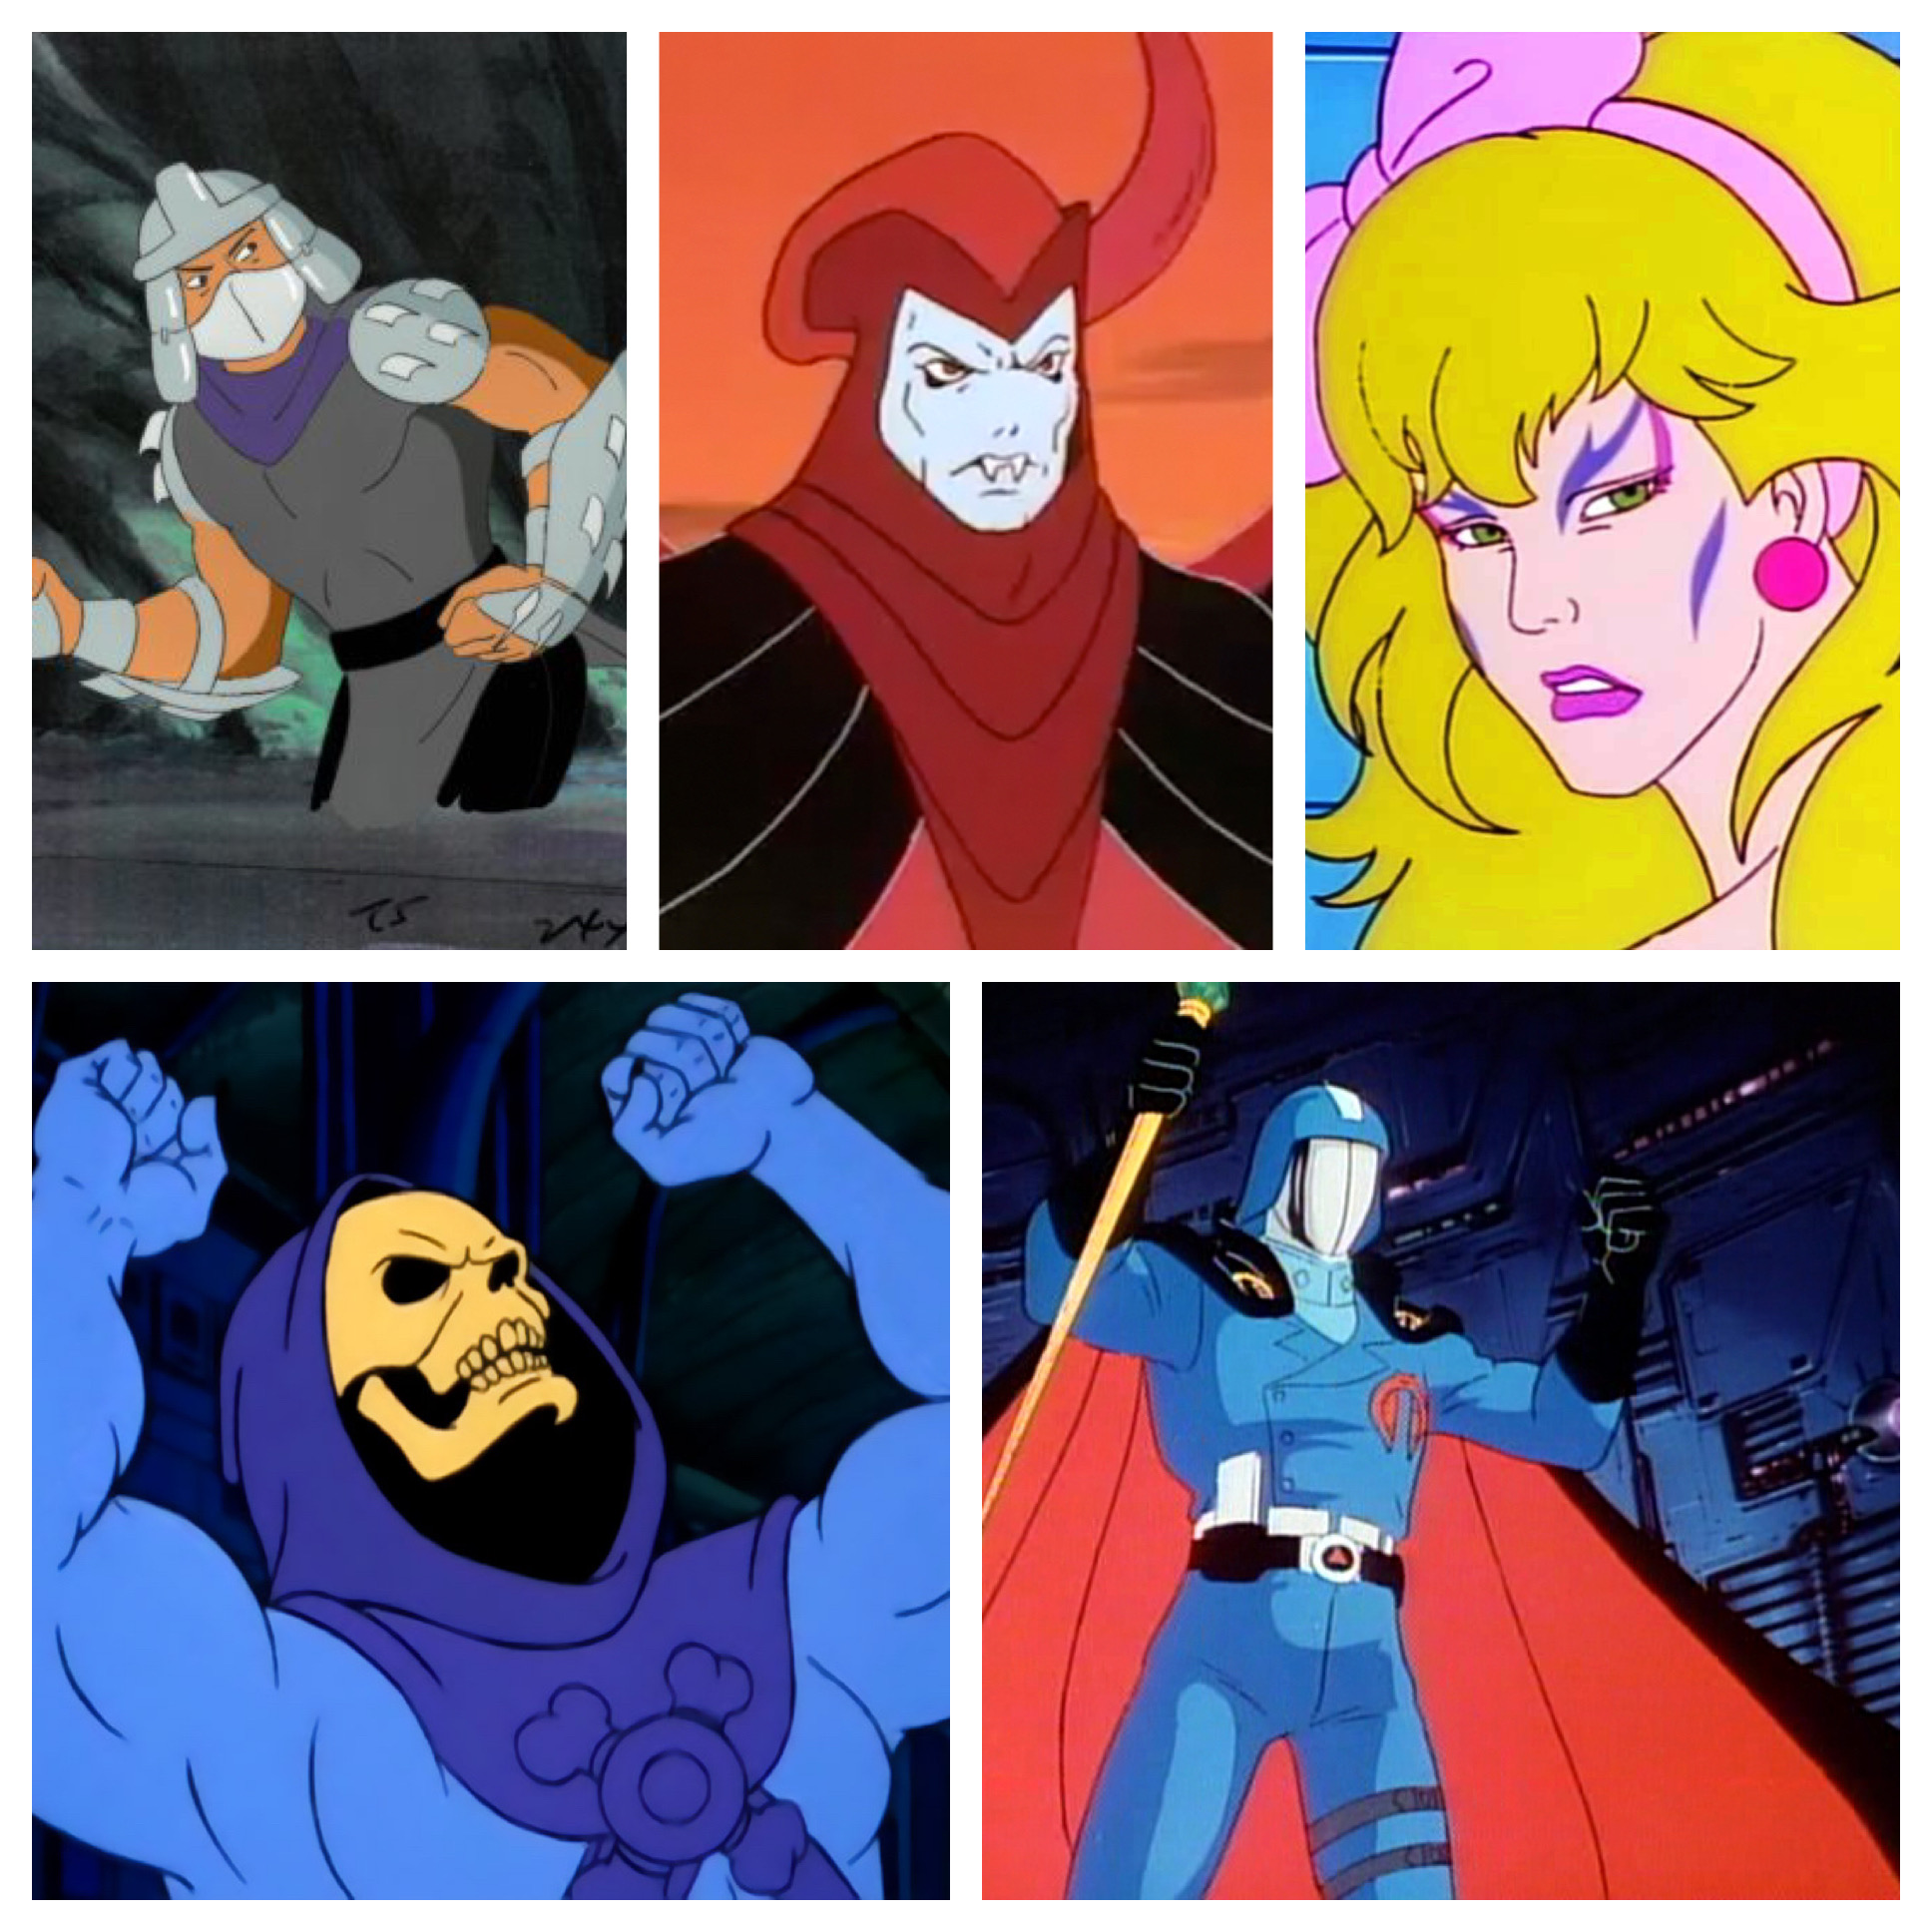 1980s women cartoon characters